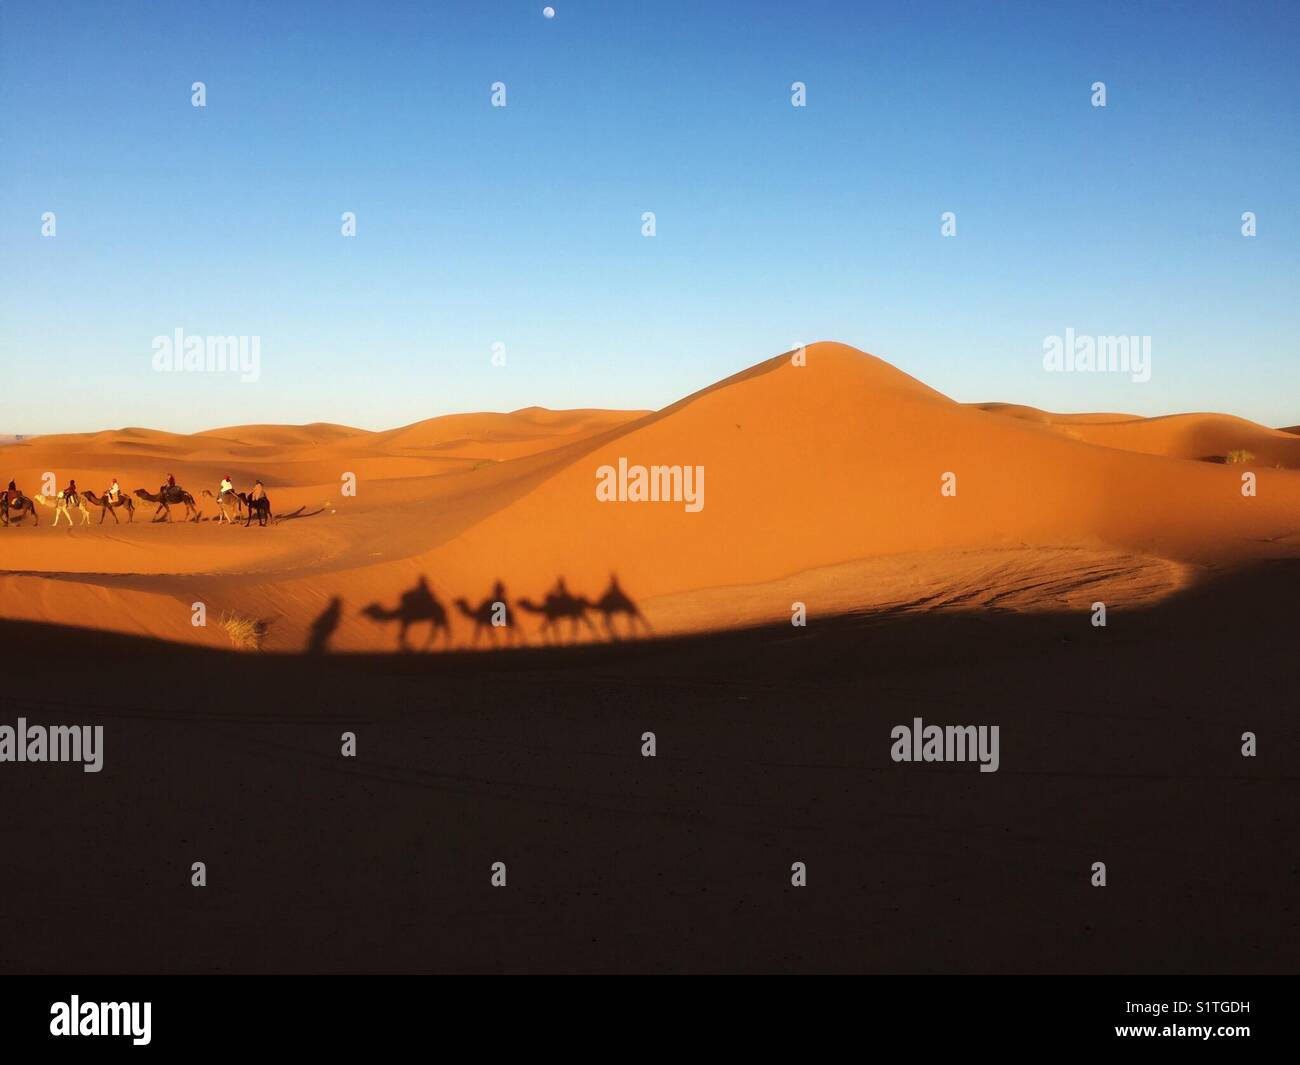 Camel ride silhouettes in Sahara Stock Photo